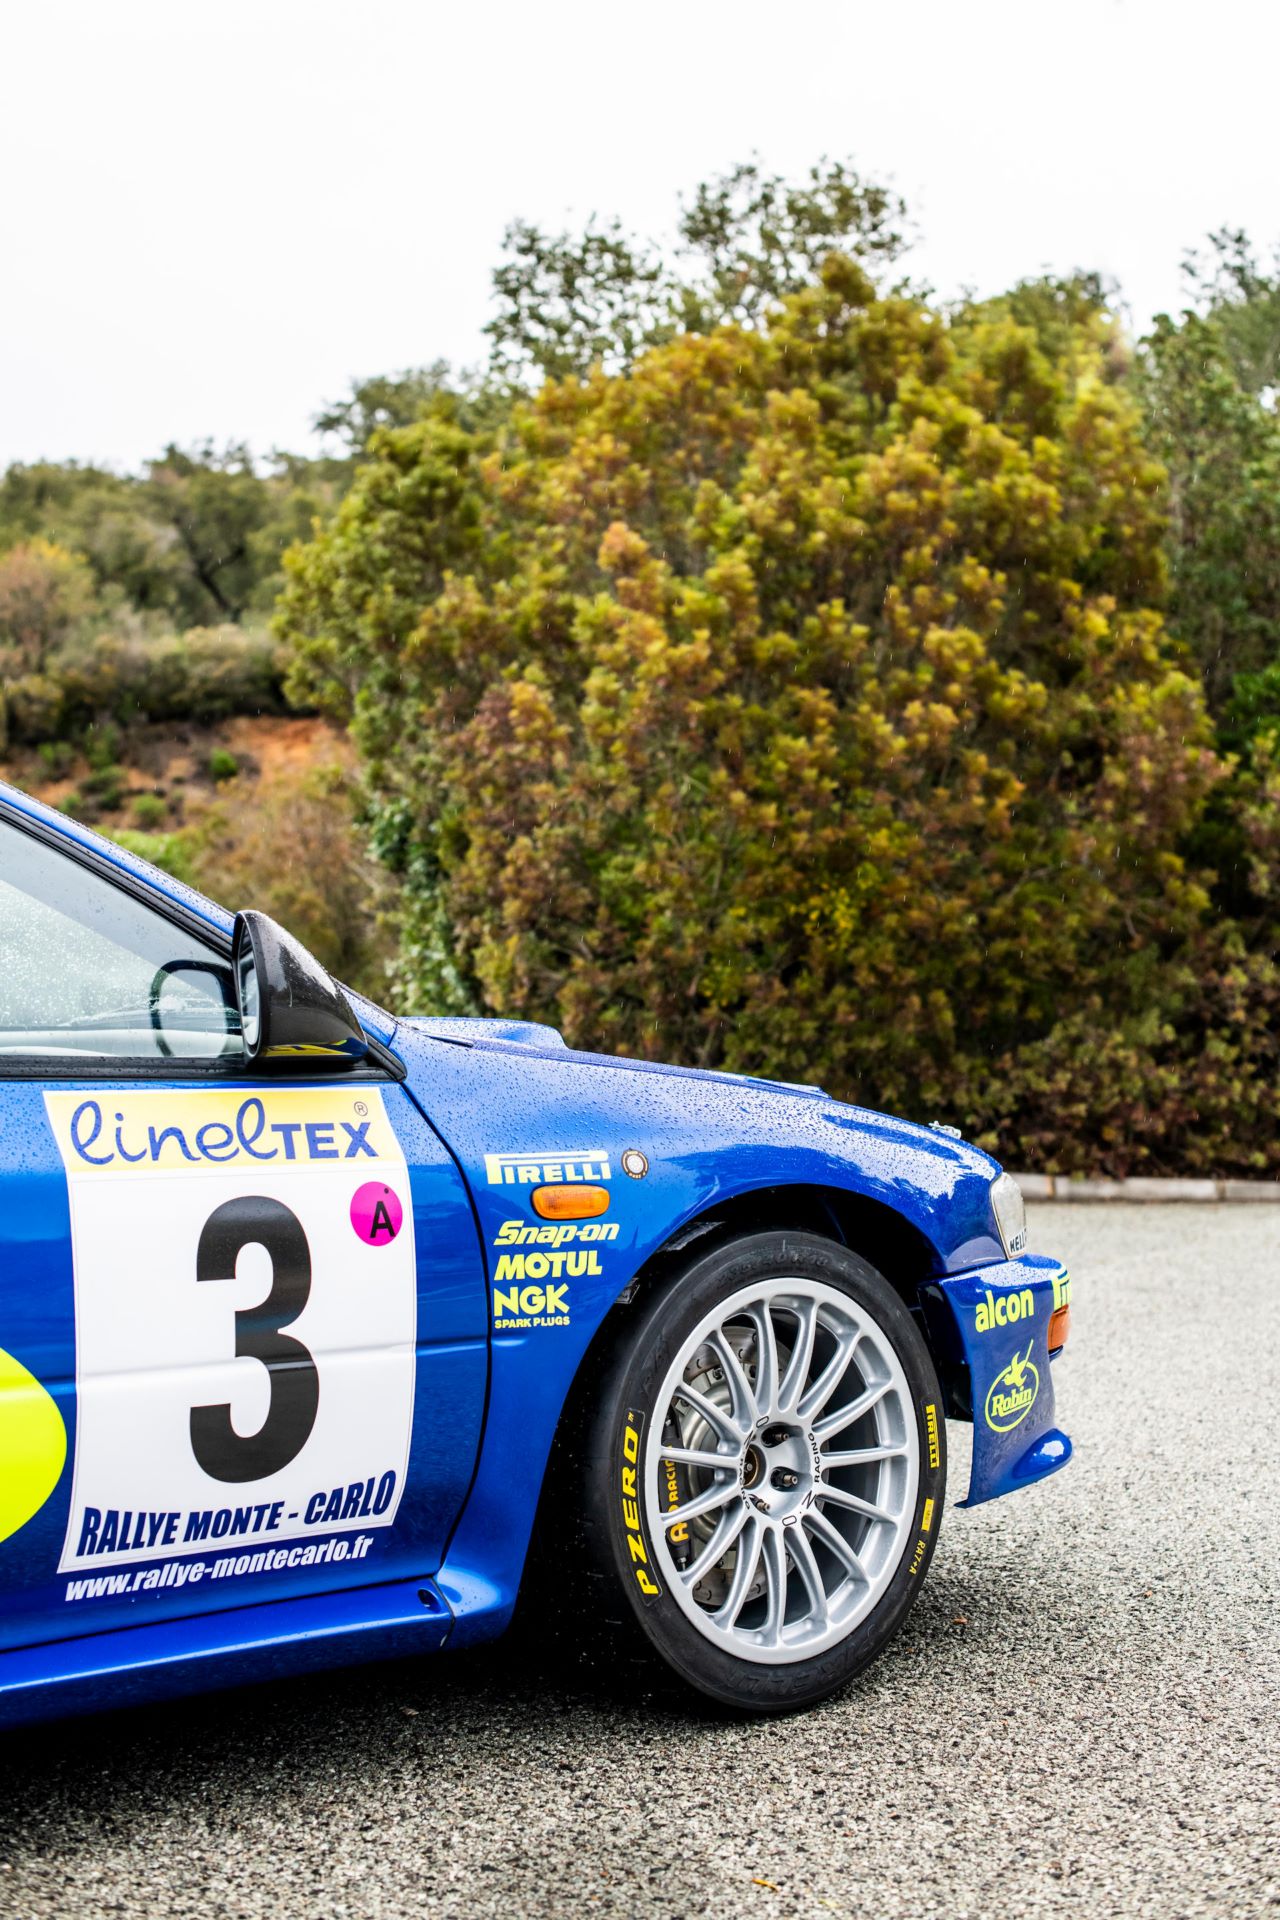 Subaru-Impreza-WRC-Richard-Burns-auction-86